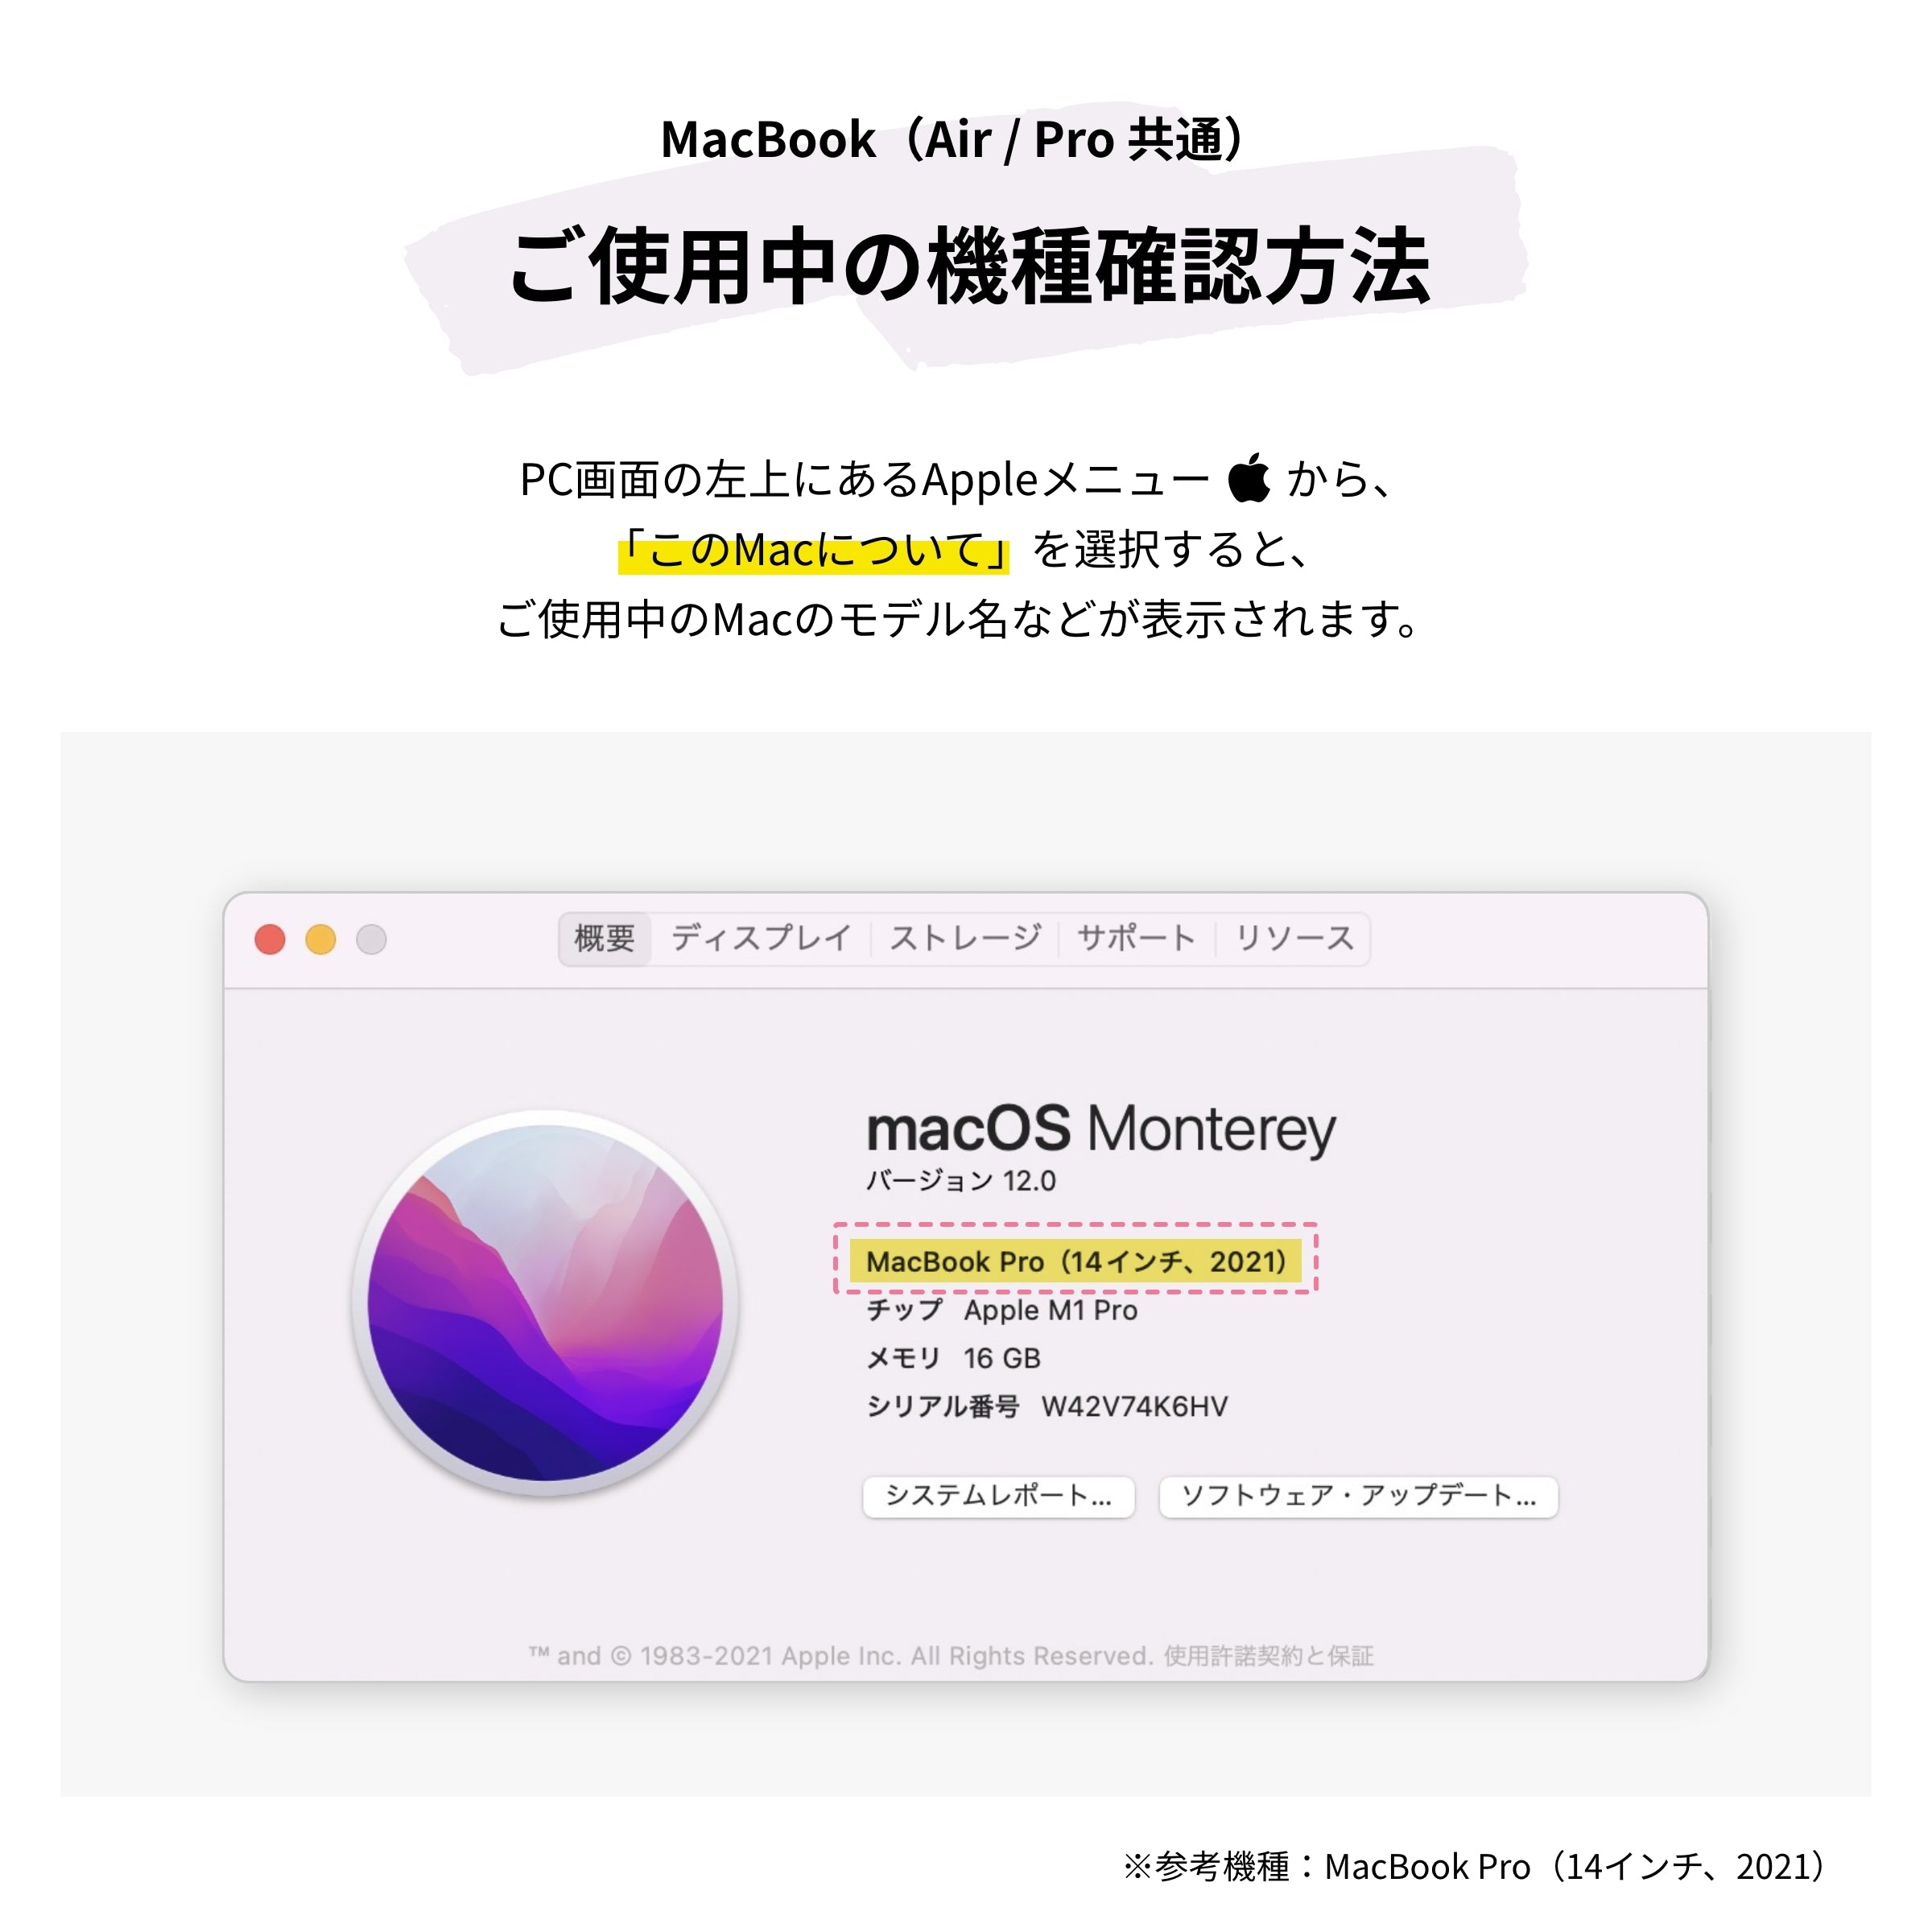 MacBook／スキンシール メタリック 全6色｜ZENN PRODUCT（ゼンプロ）